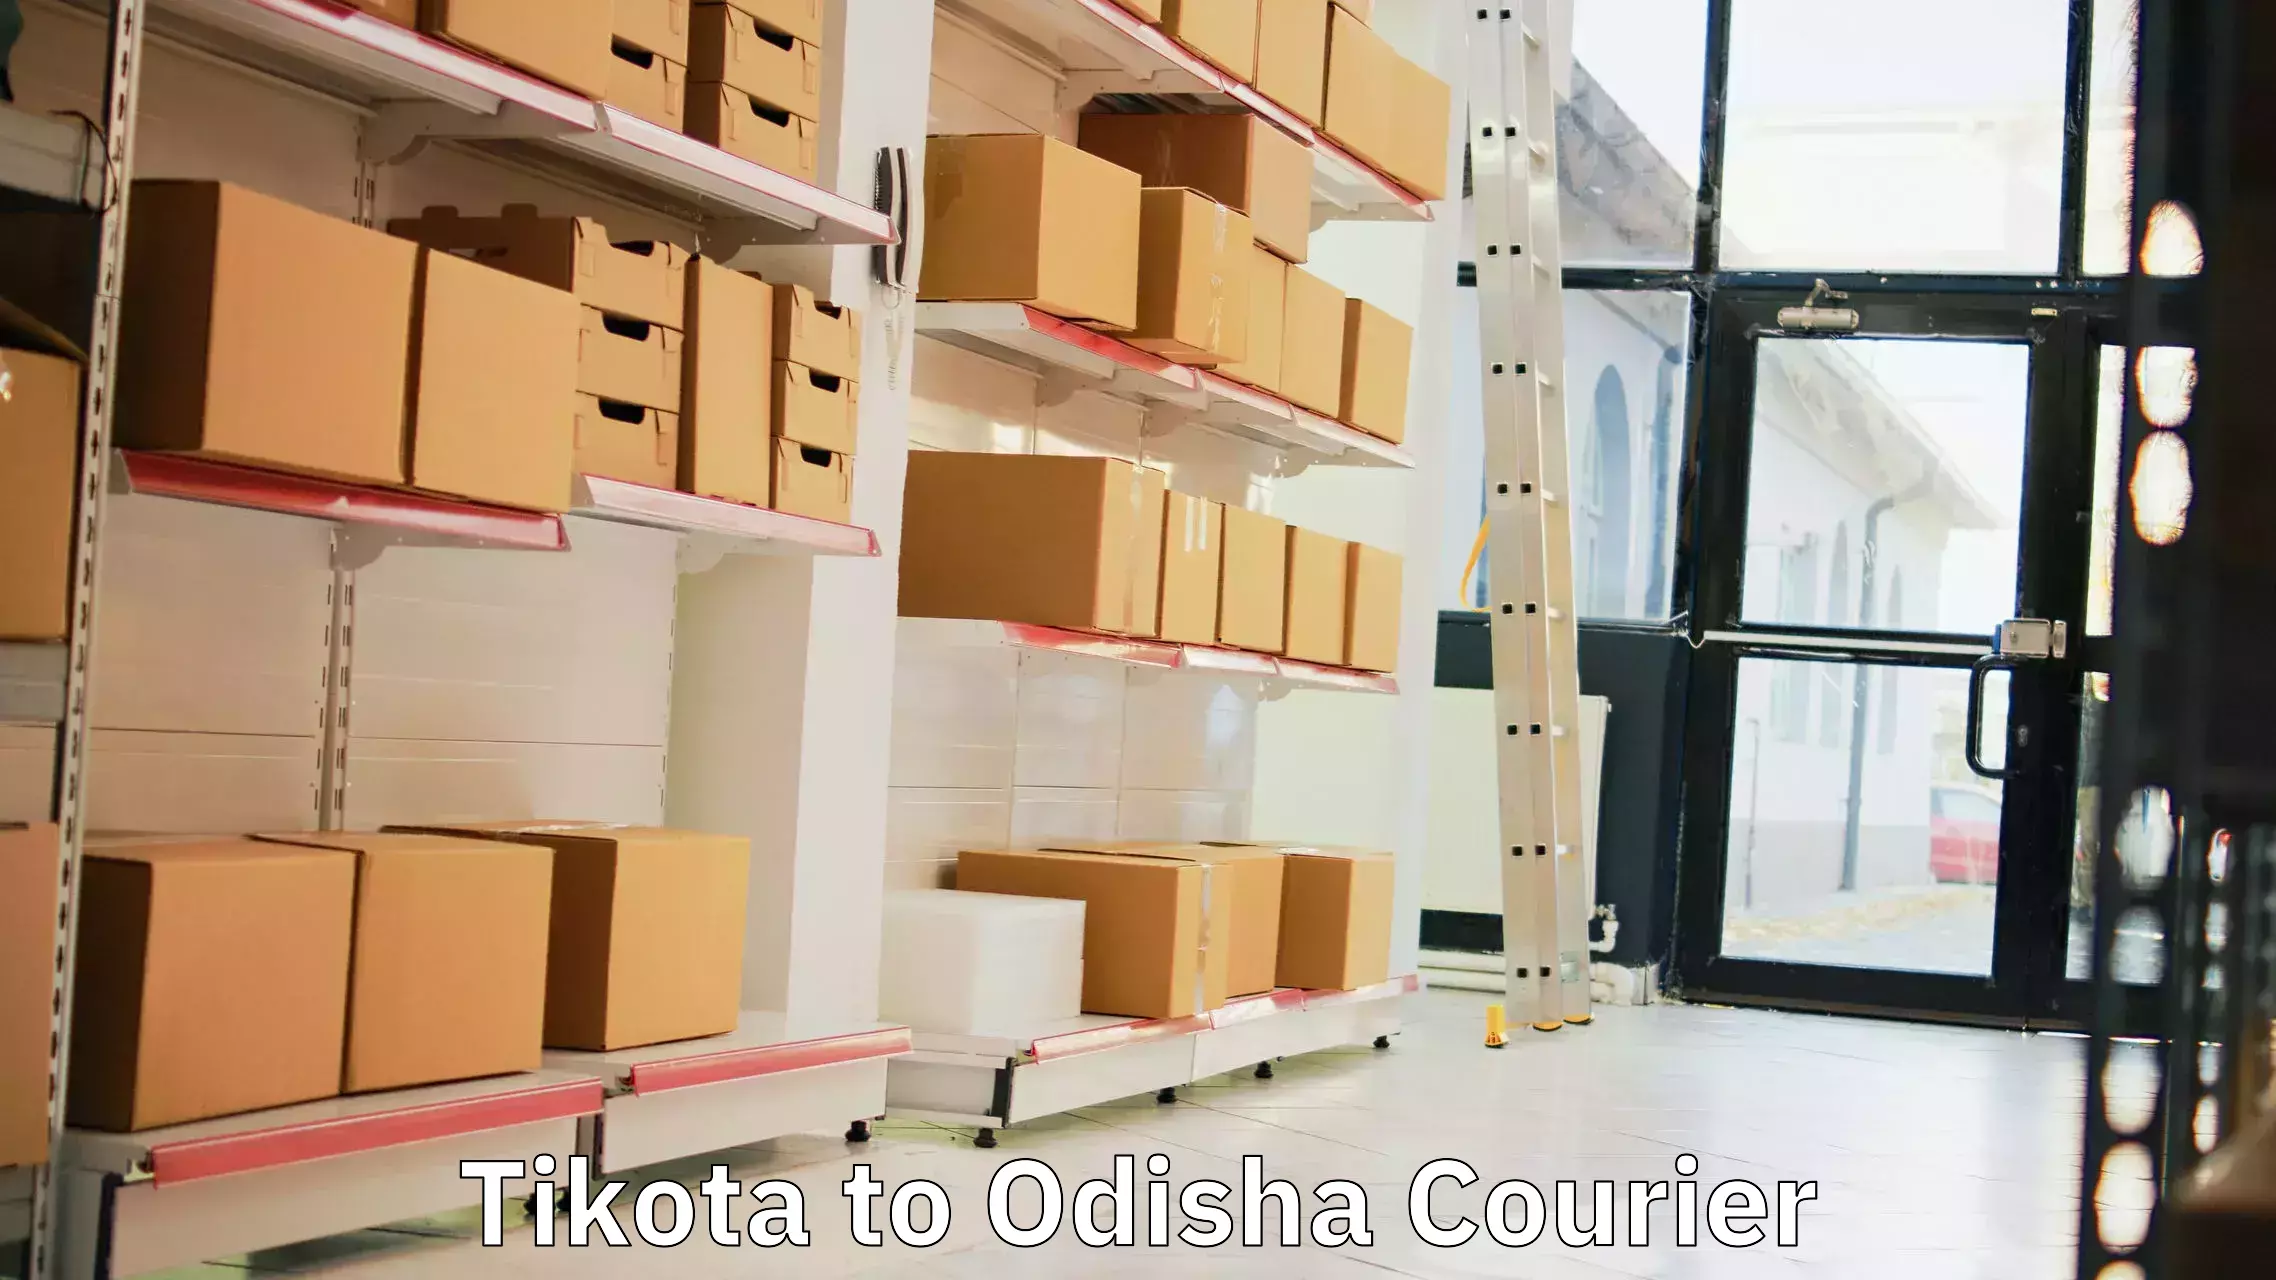 Courier service booking in Tikota to Kesinga